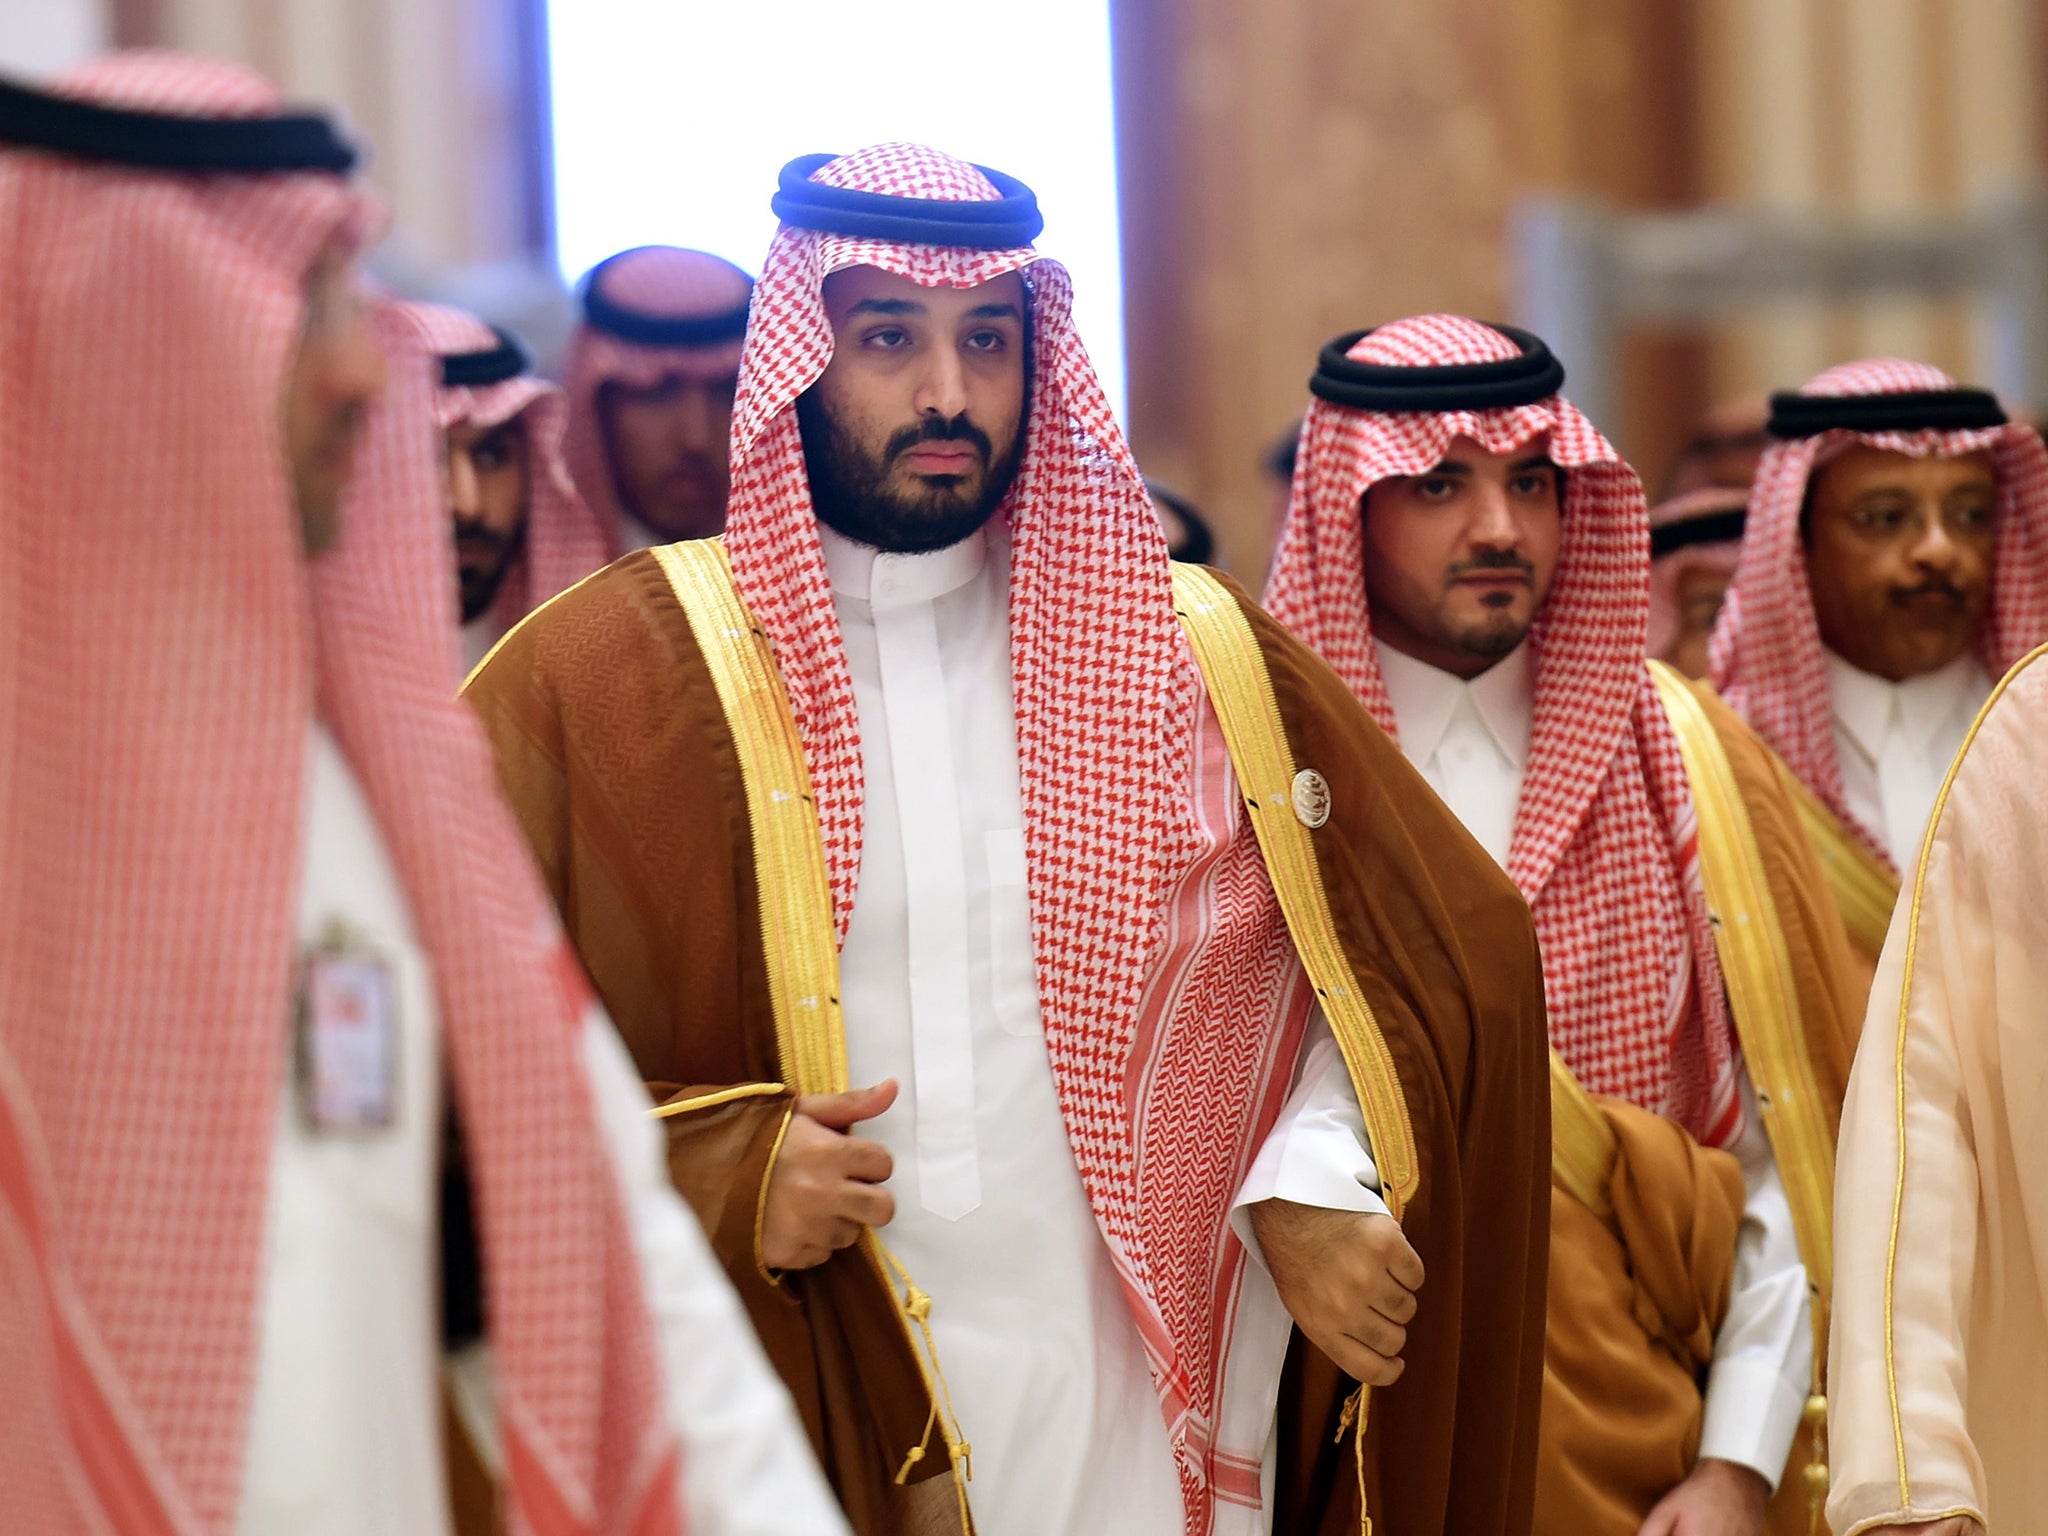 Prince Mohammed bin Salman said that Riyadh, the capital of Saudi Arabia, needed to cut its dependence on crude oil revenue.